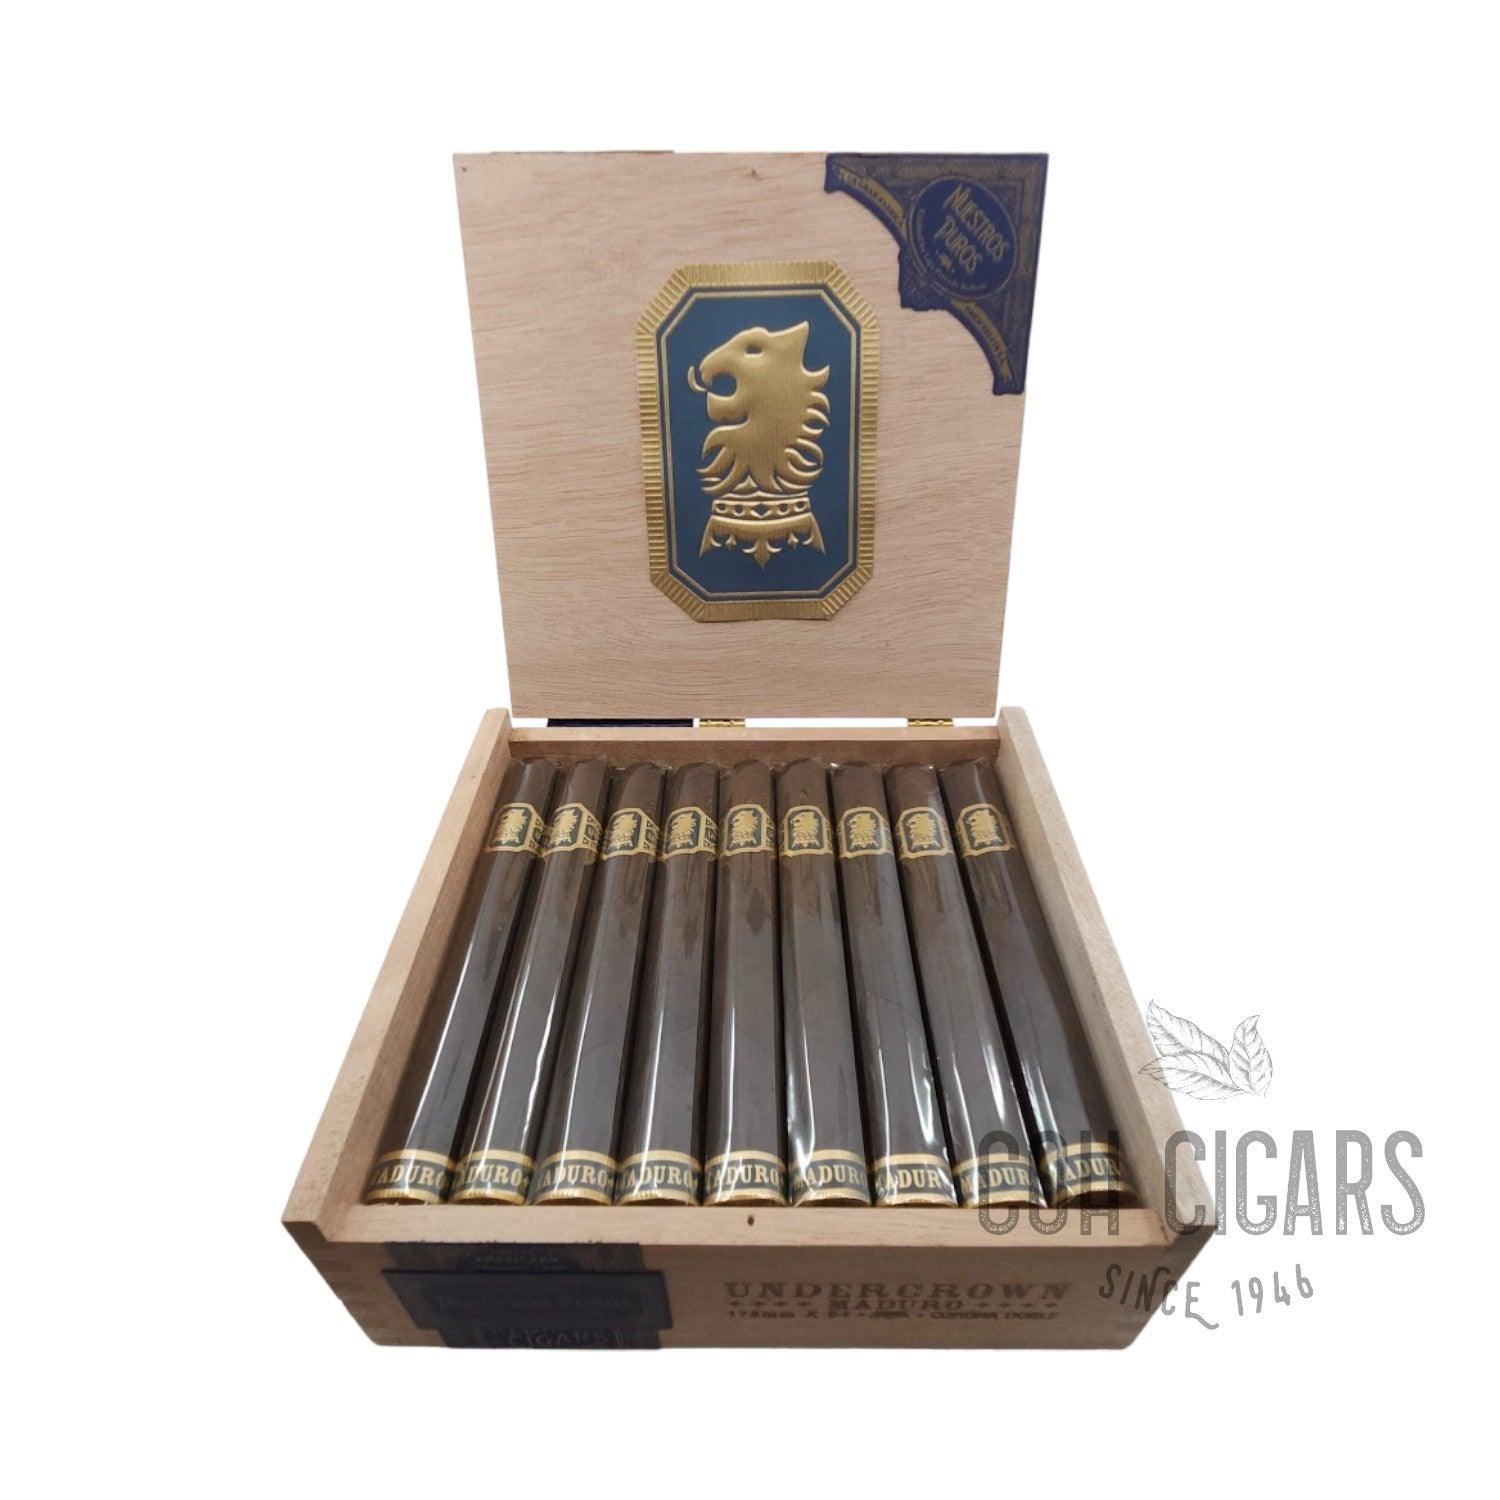 Drew Estate Cigar | Liga Undercrown Maduro Corona Doble | Box 25 - HK CohCigars